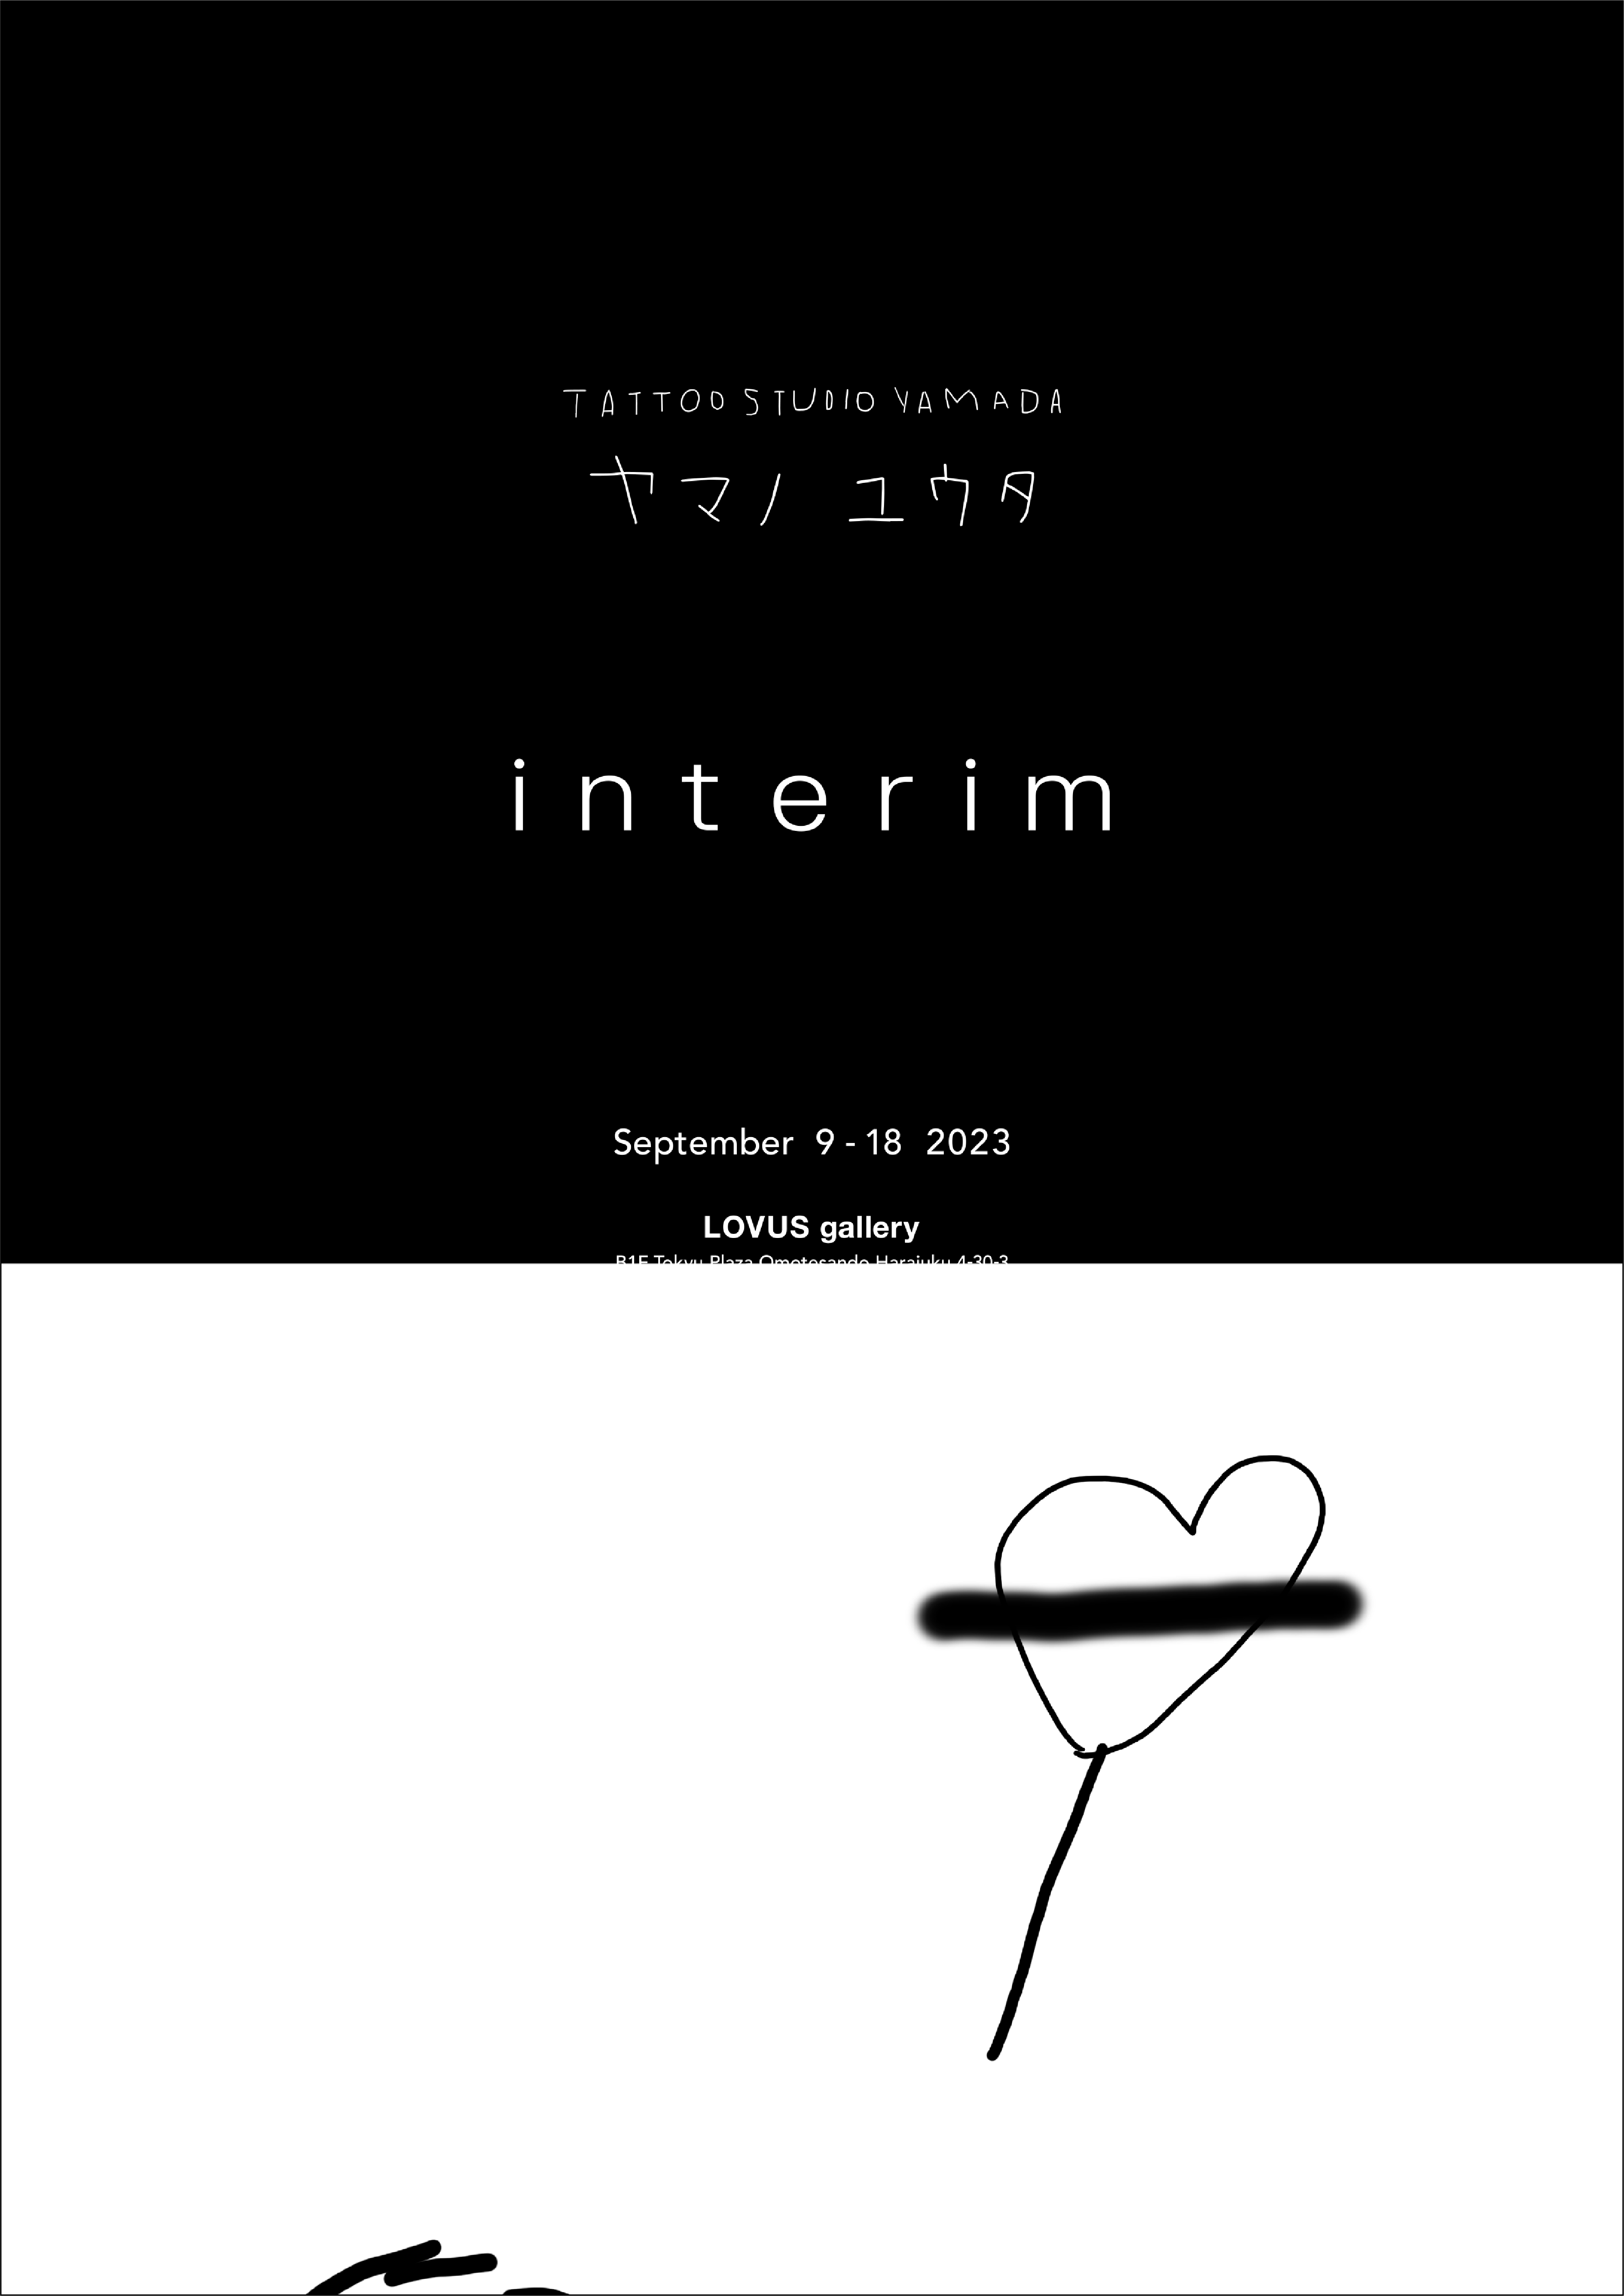 TATTOO STUDIO YAMADA所属のヤマノユウタが個展「interim」を開催